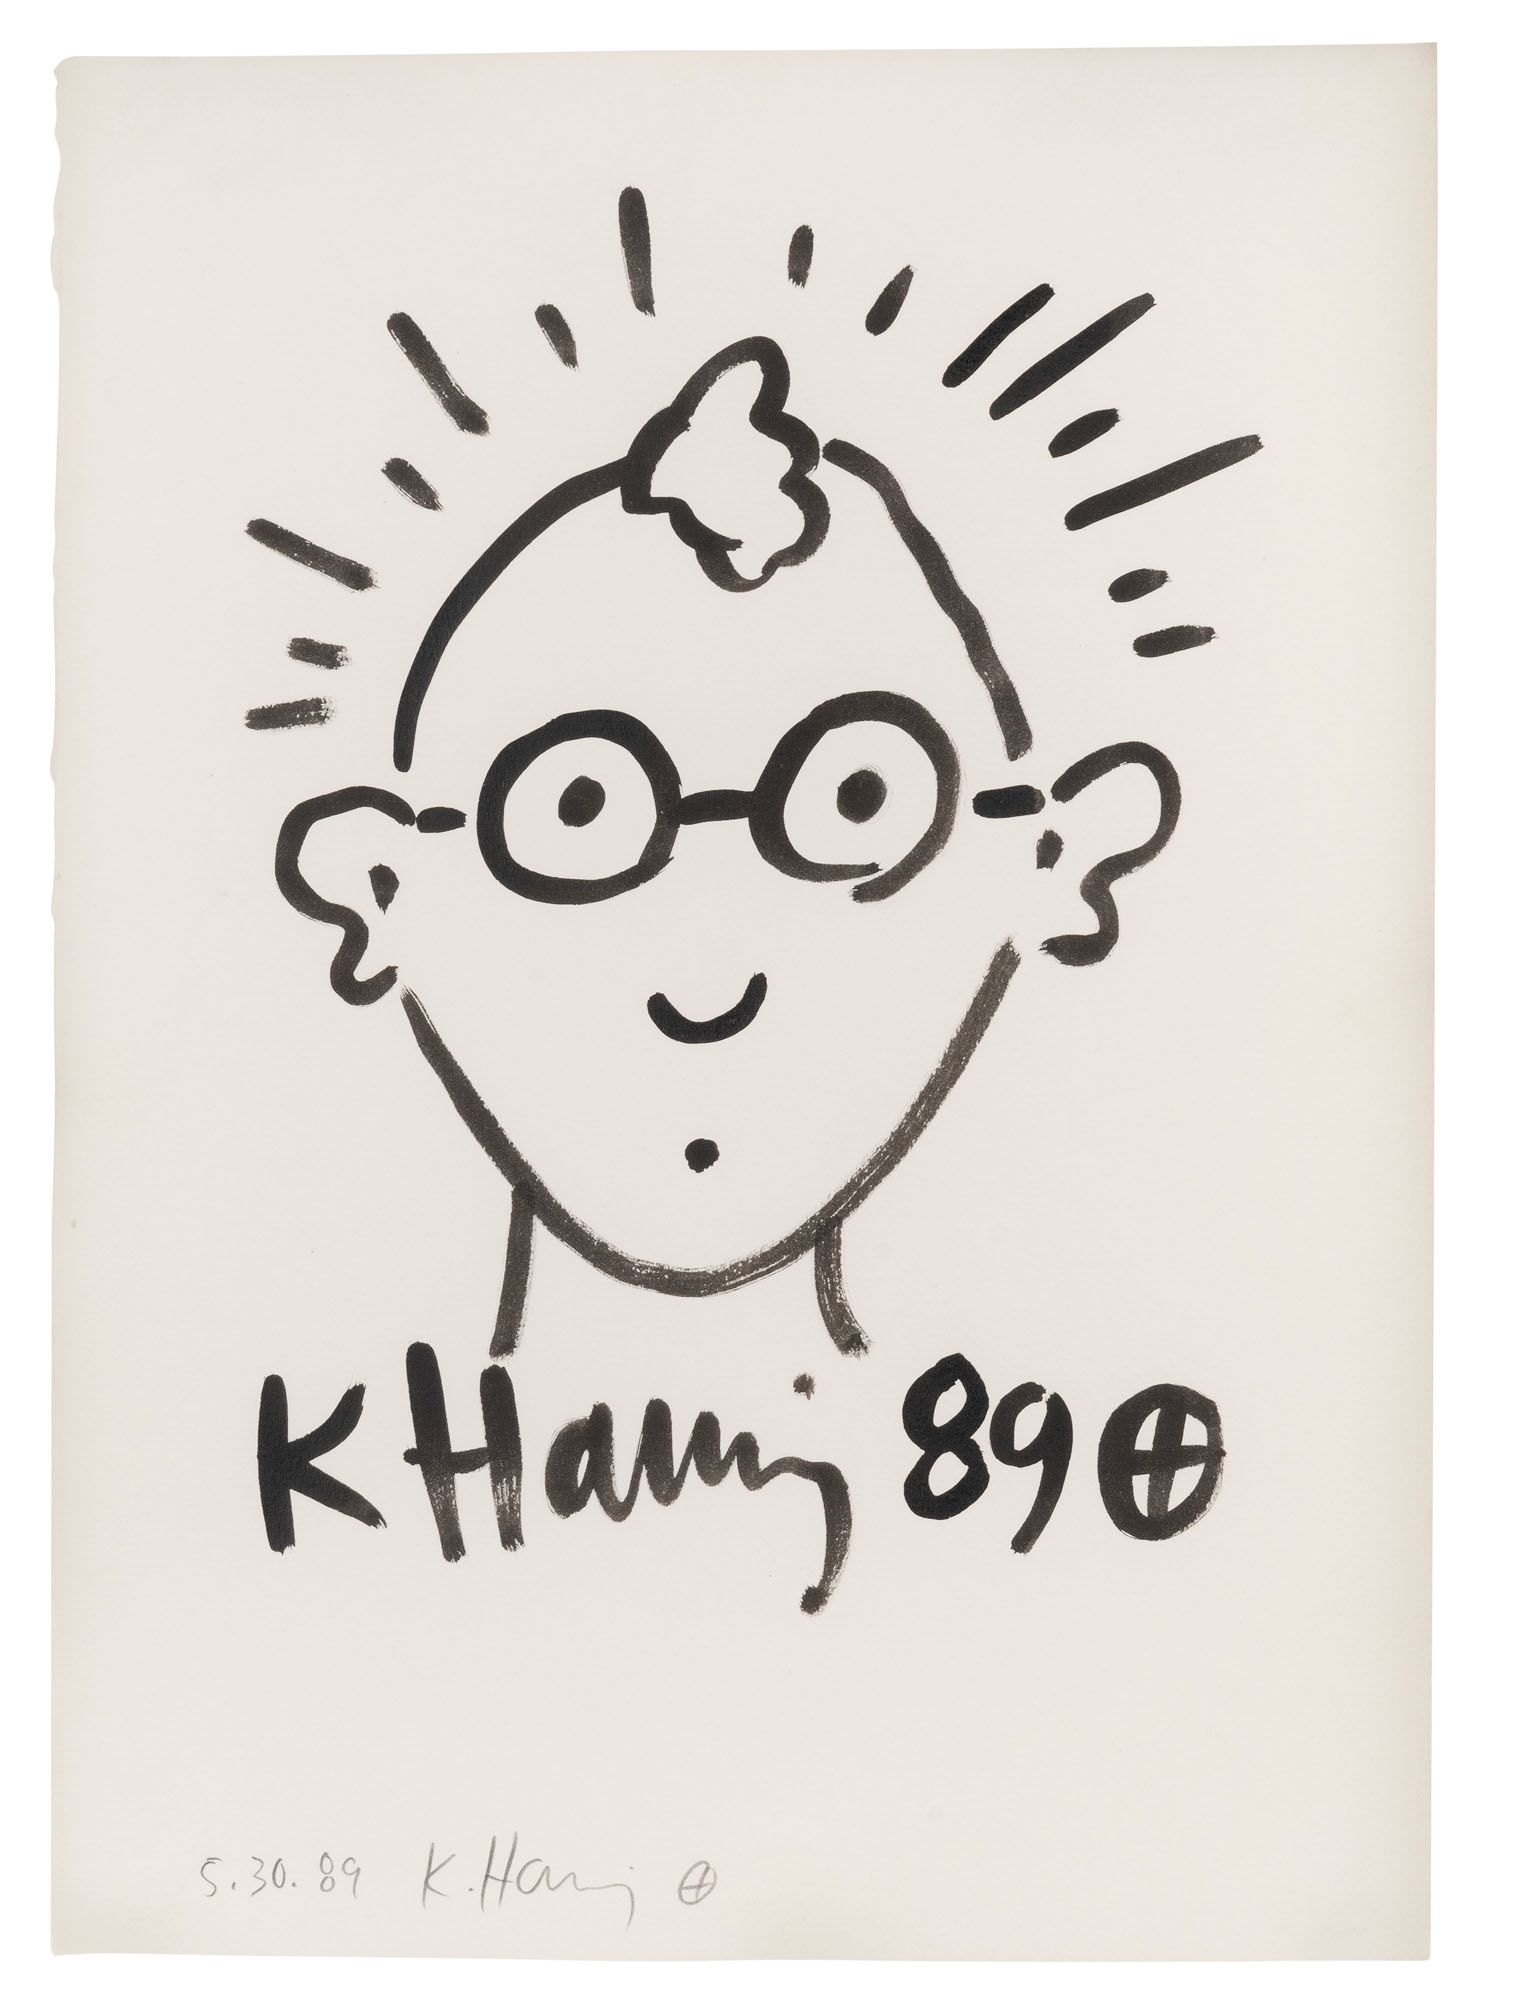 Keith Haring's Self Portrait 1989